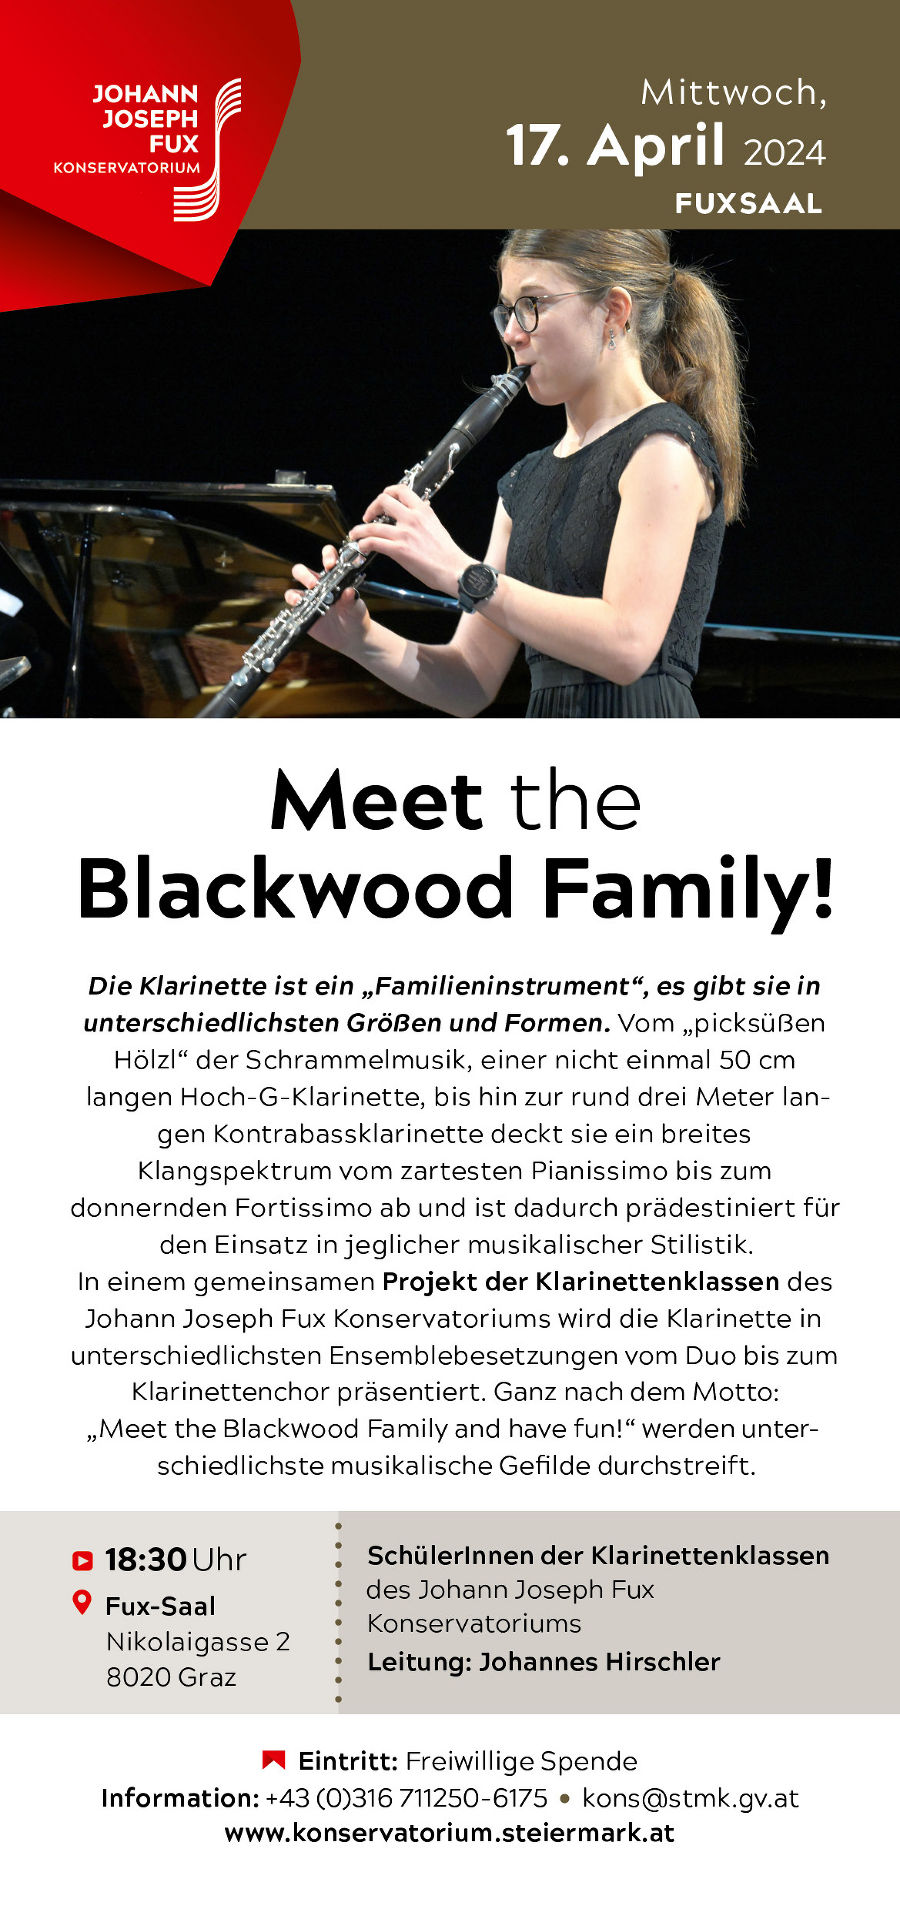 Meet the Blackwood Family